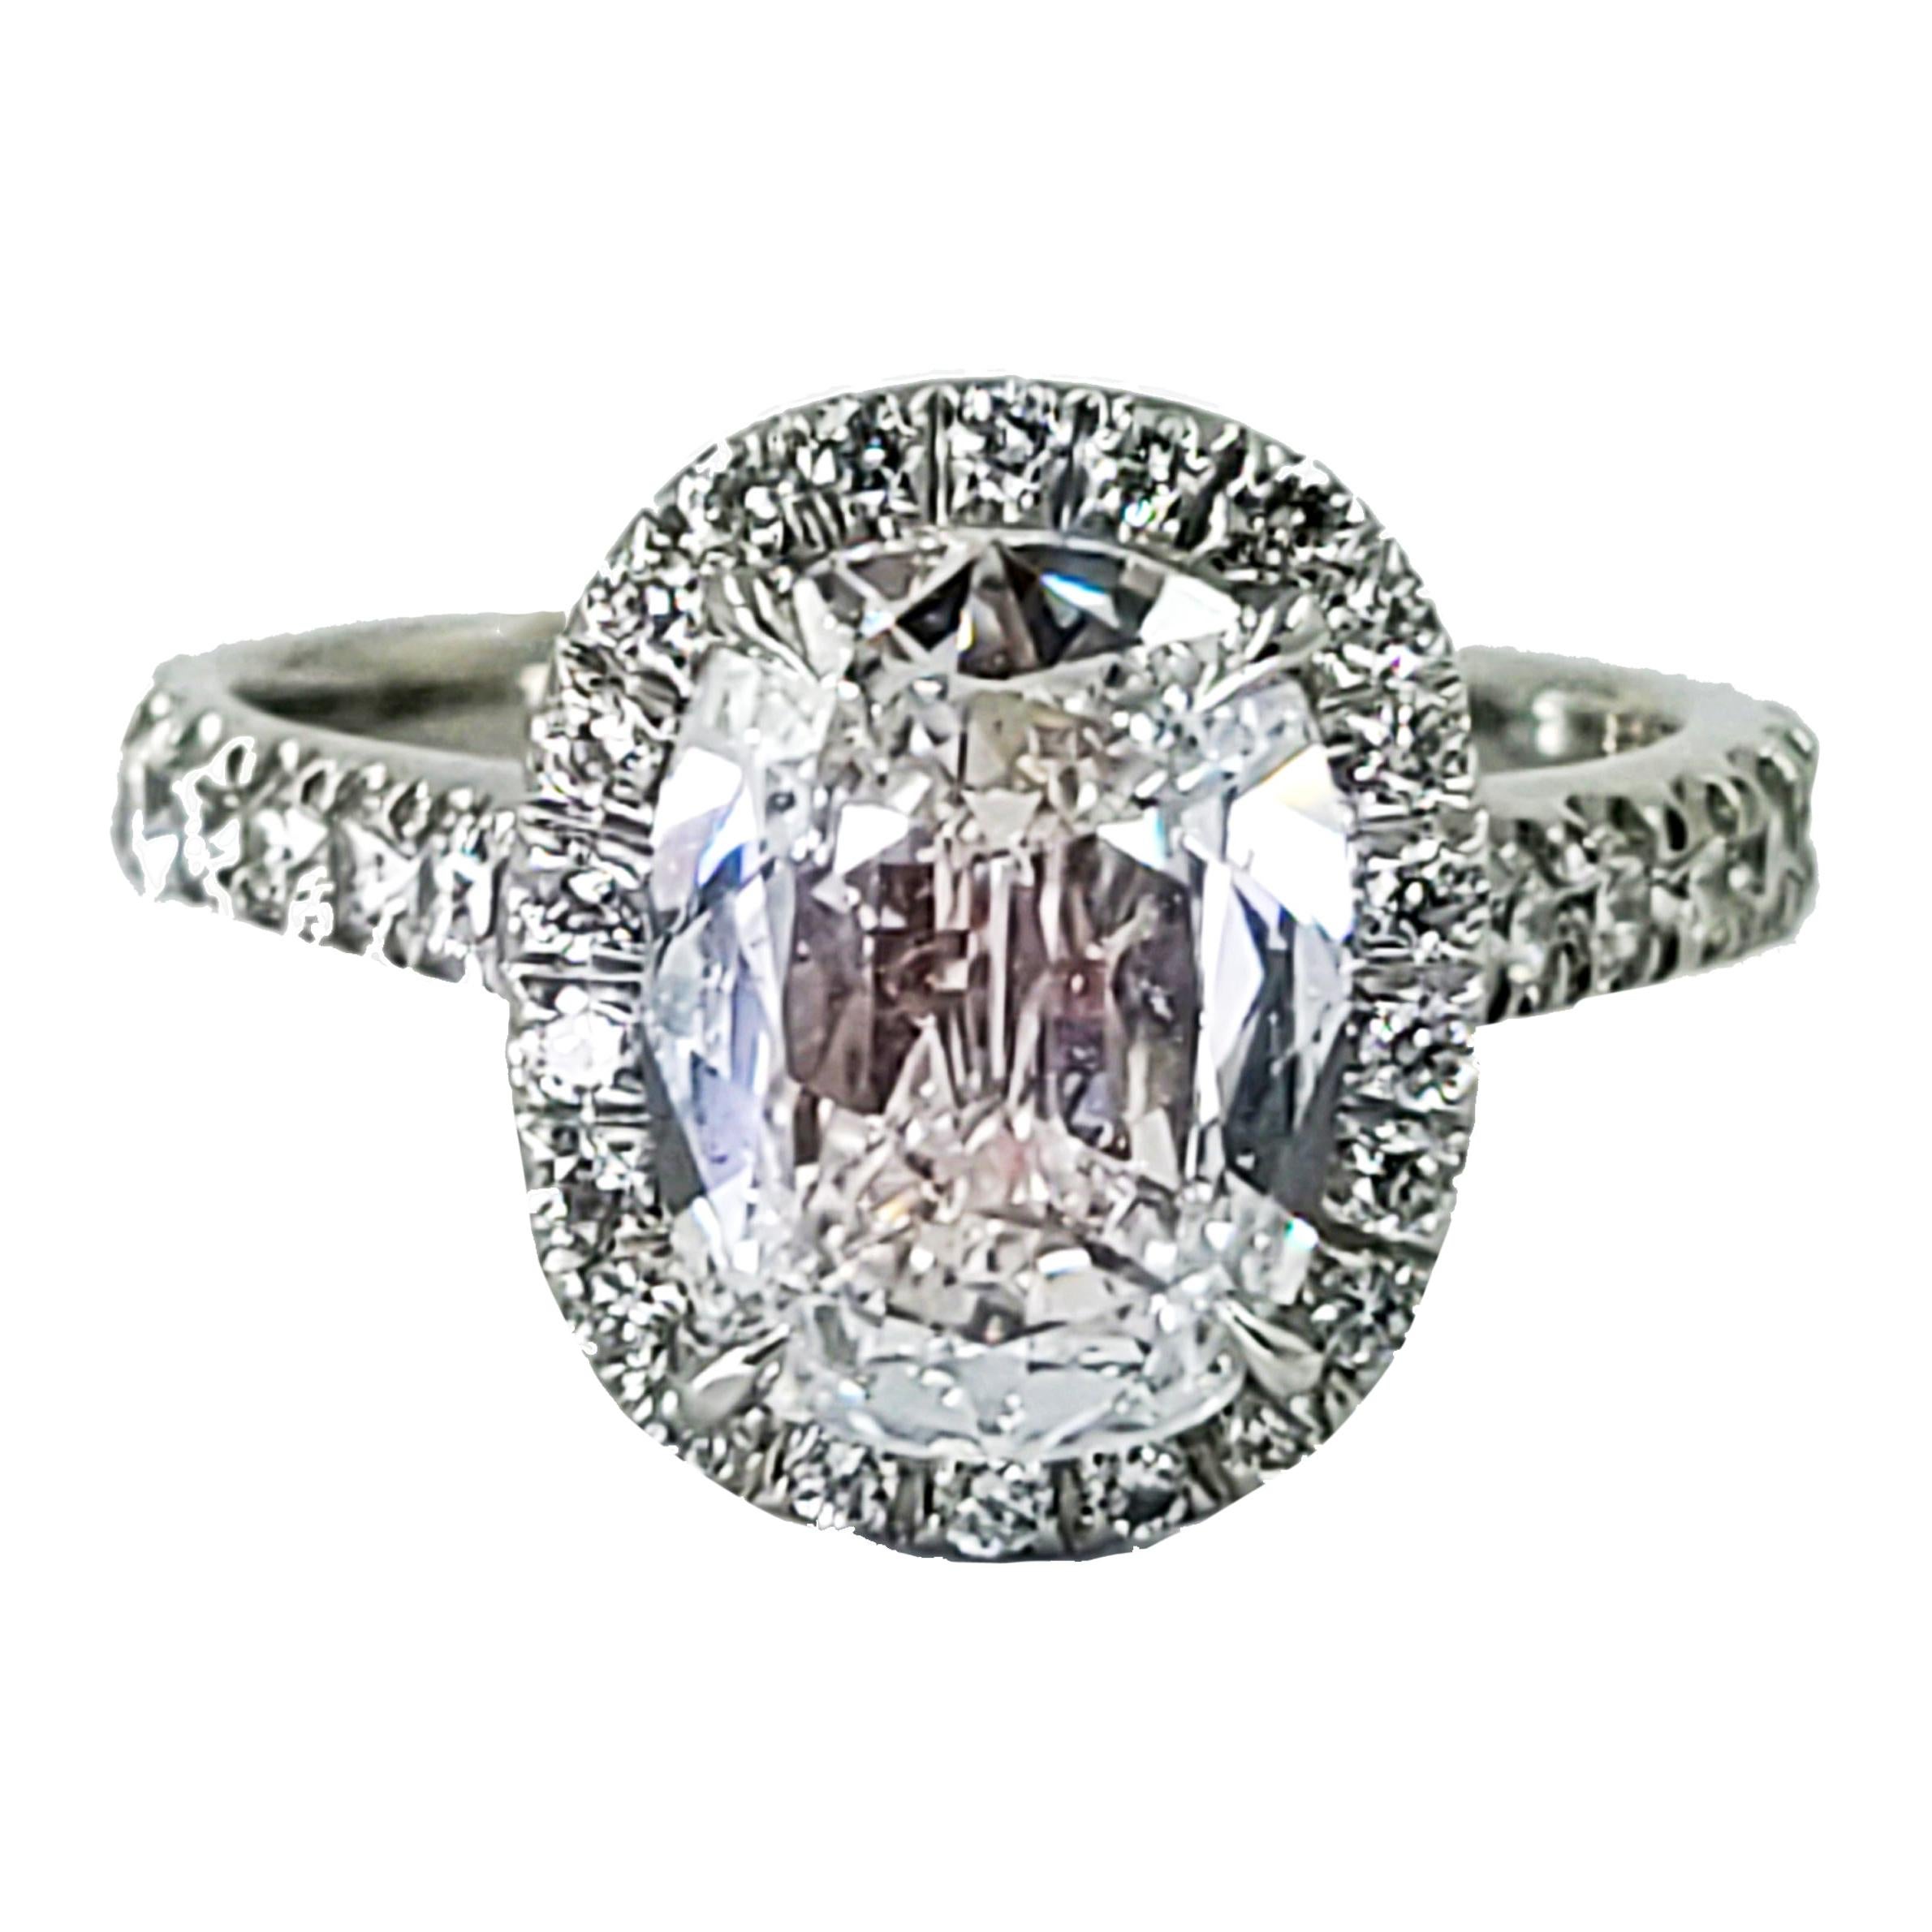 2.26 Carat Cushion Cut Diamond Engagement Ring in Halo